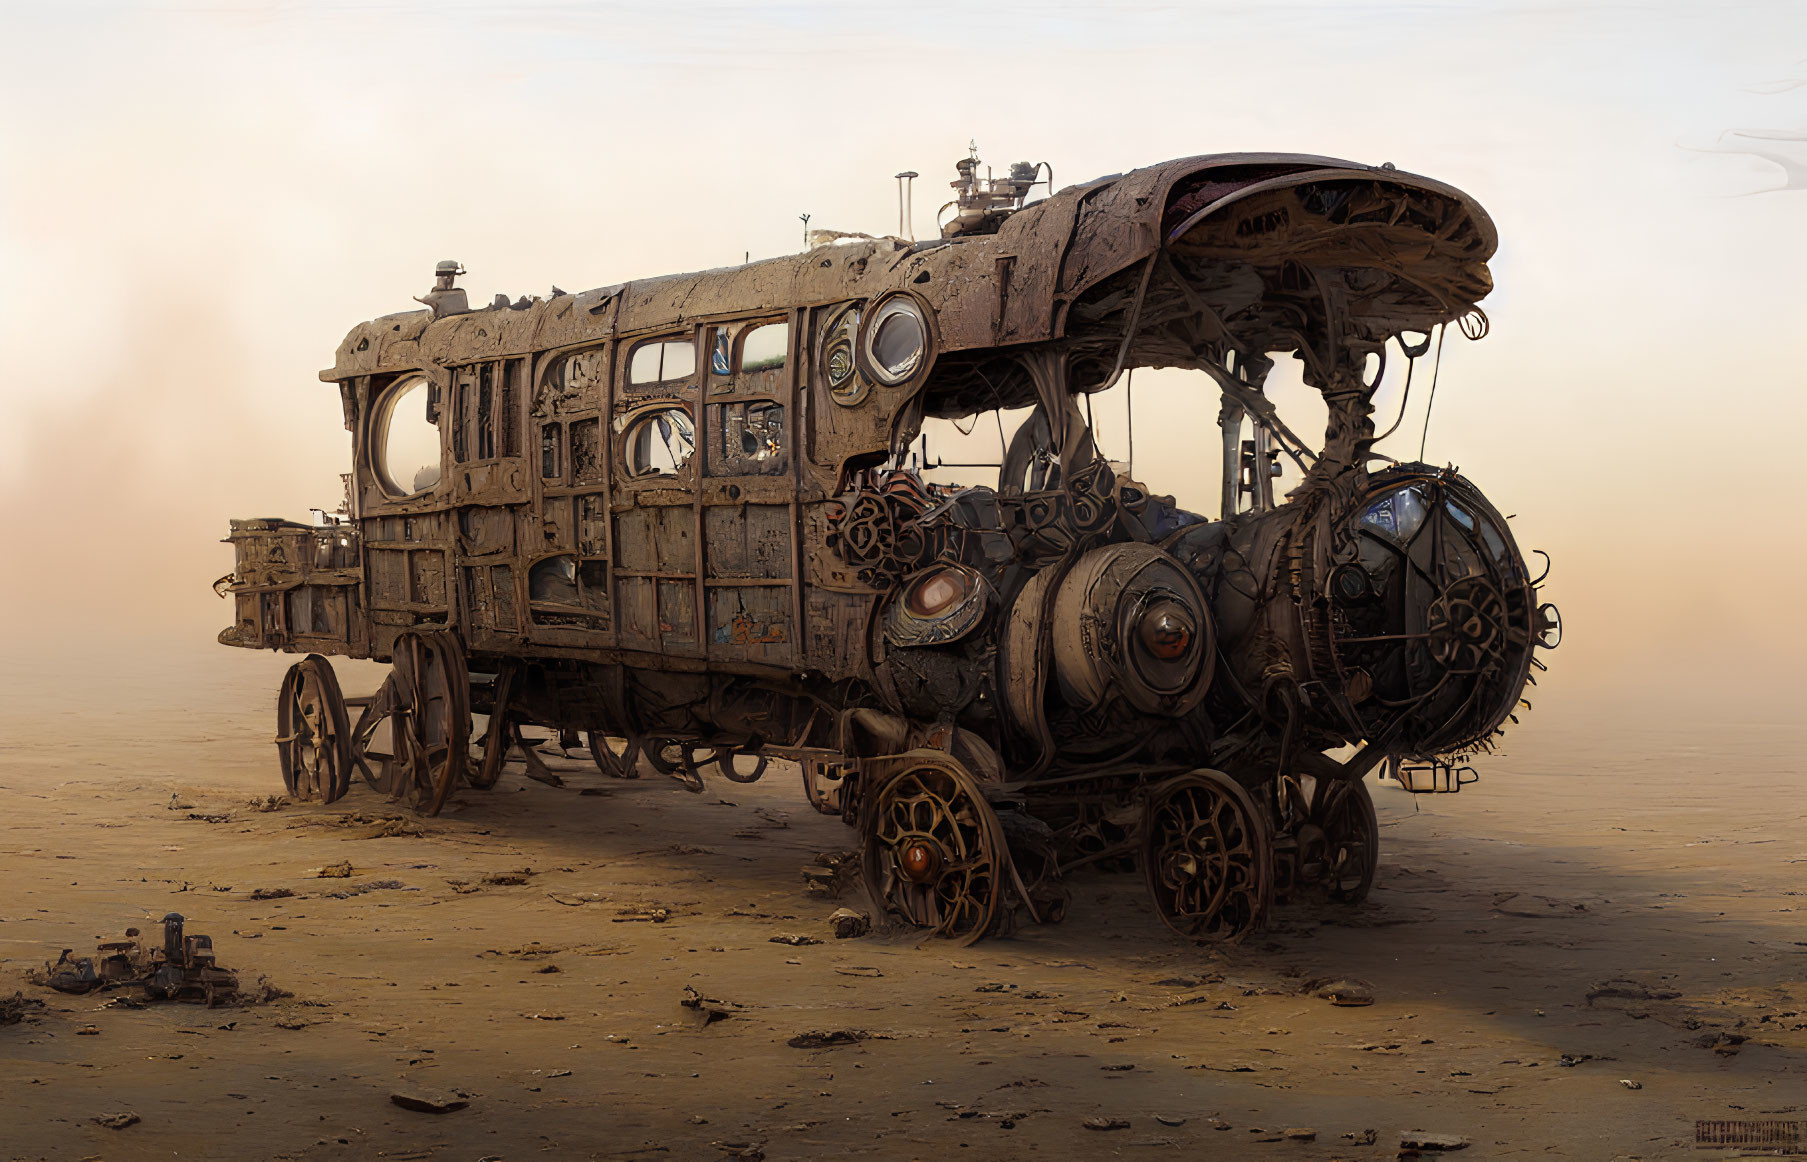 Vintage steampunk locomotive in post-apocalyptic sandy landscape